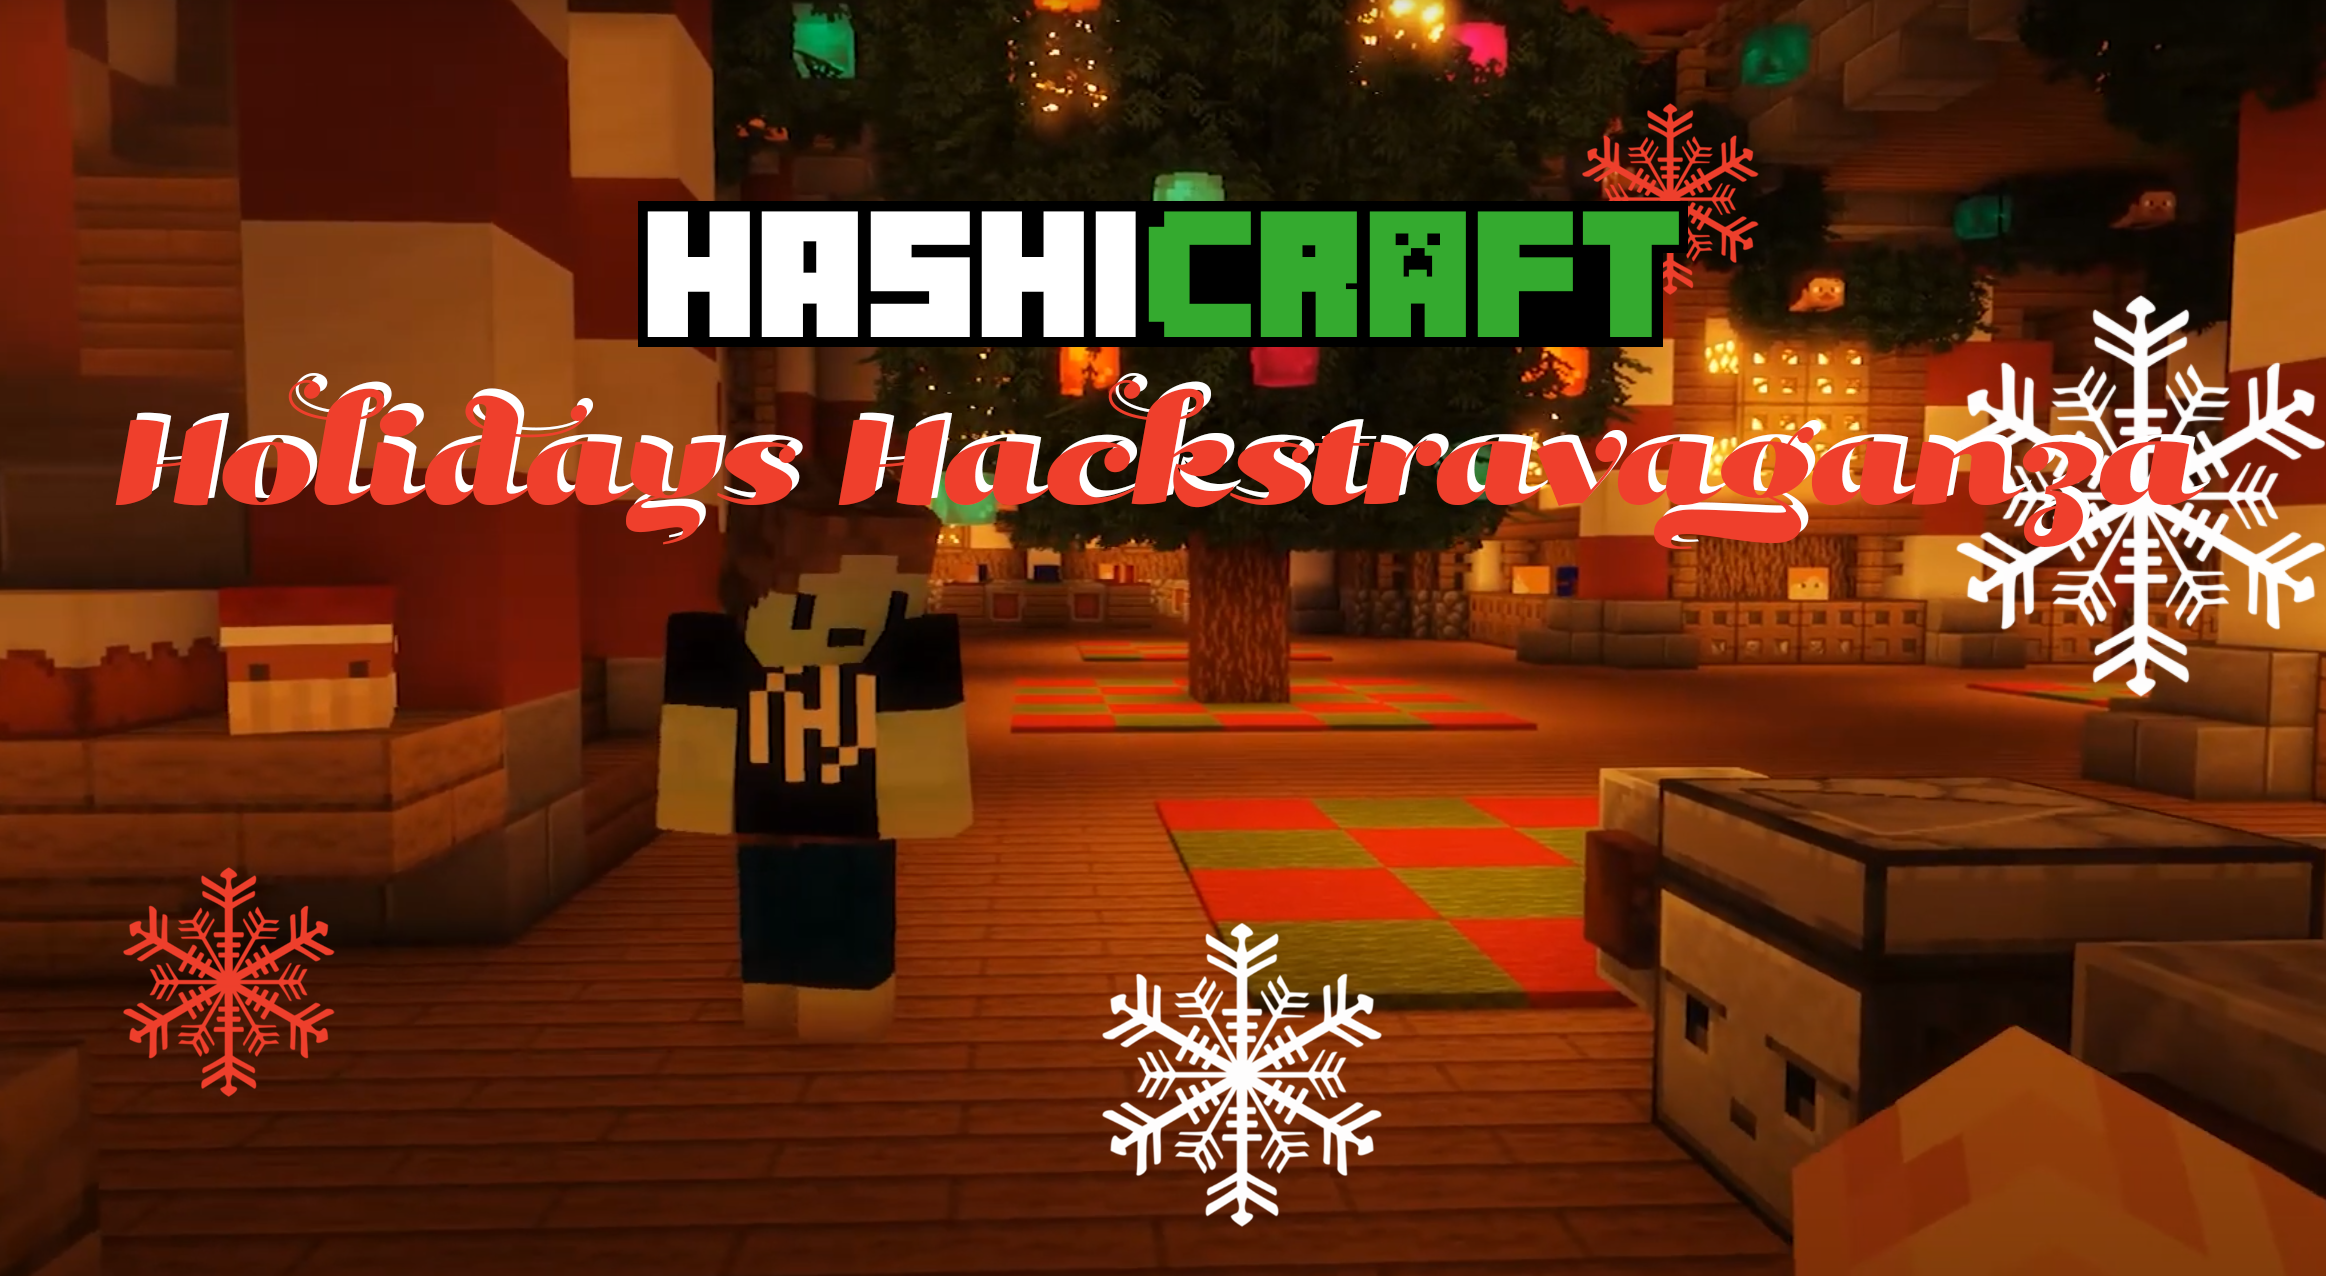 Announcing the HashiCraft Holidays Hackstravaganza